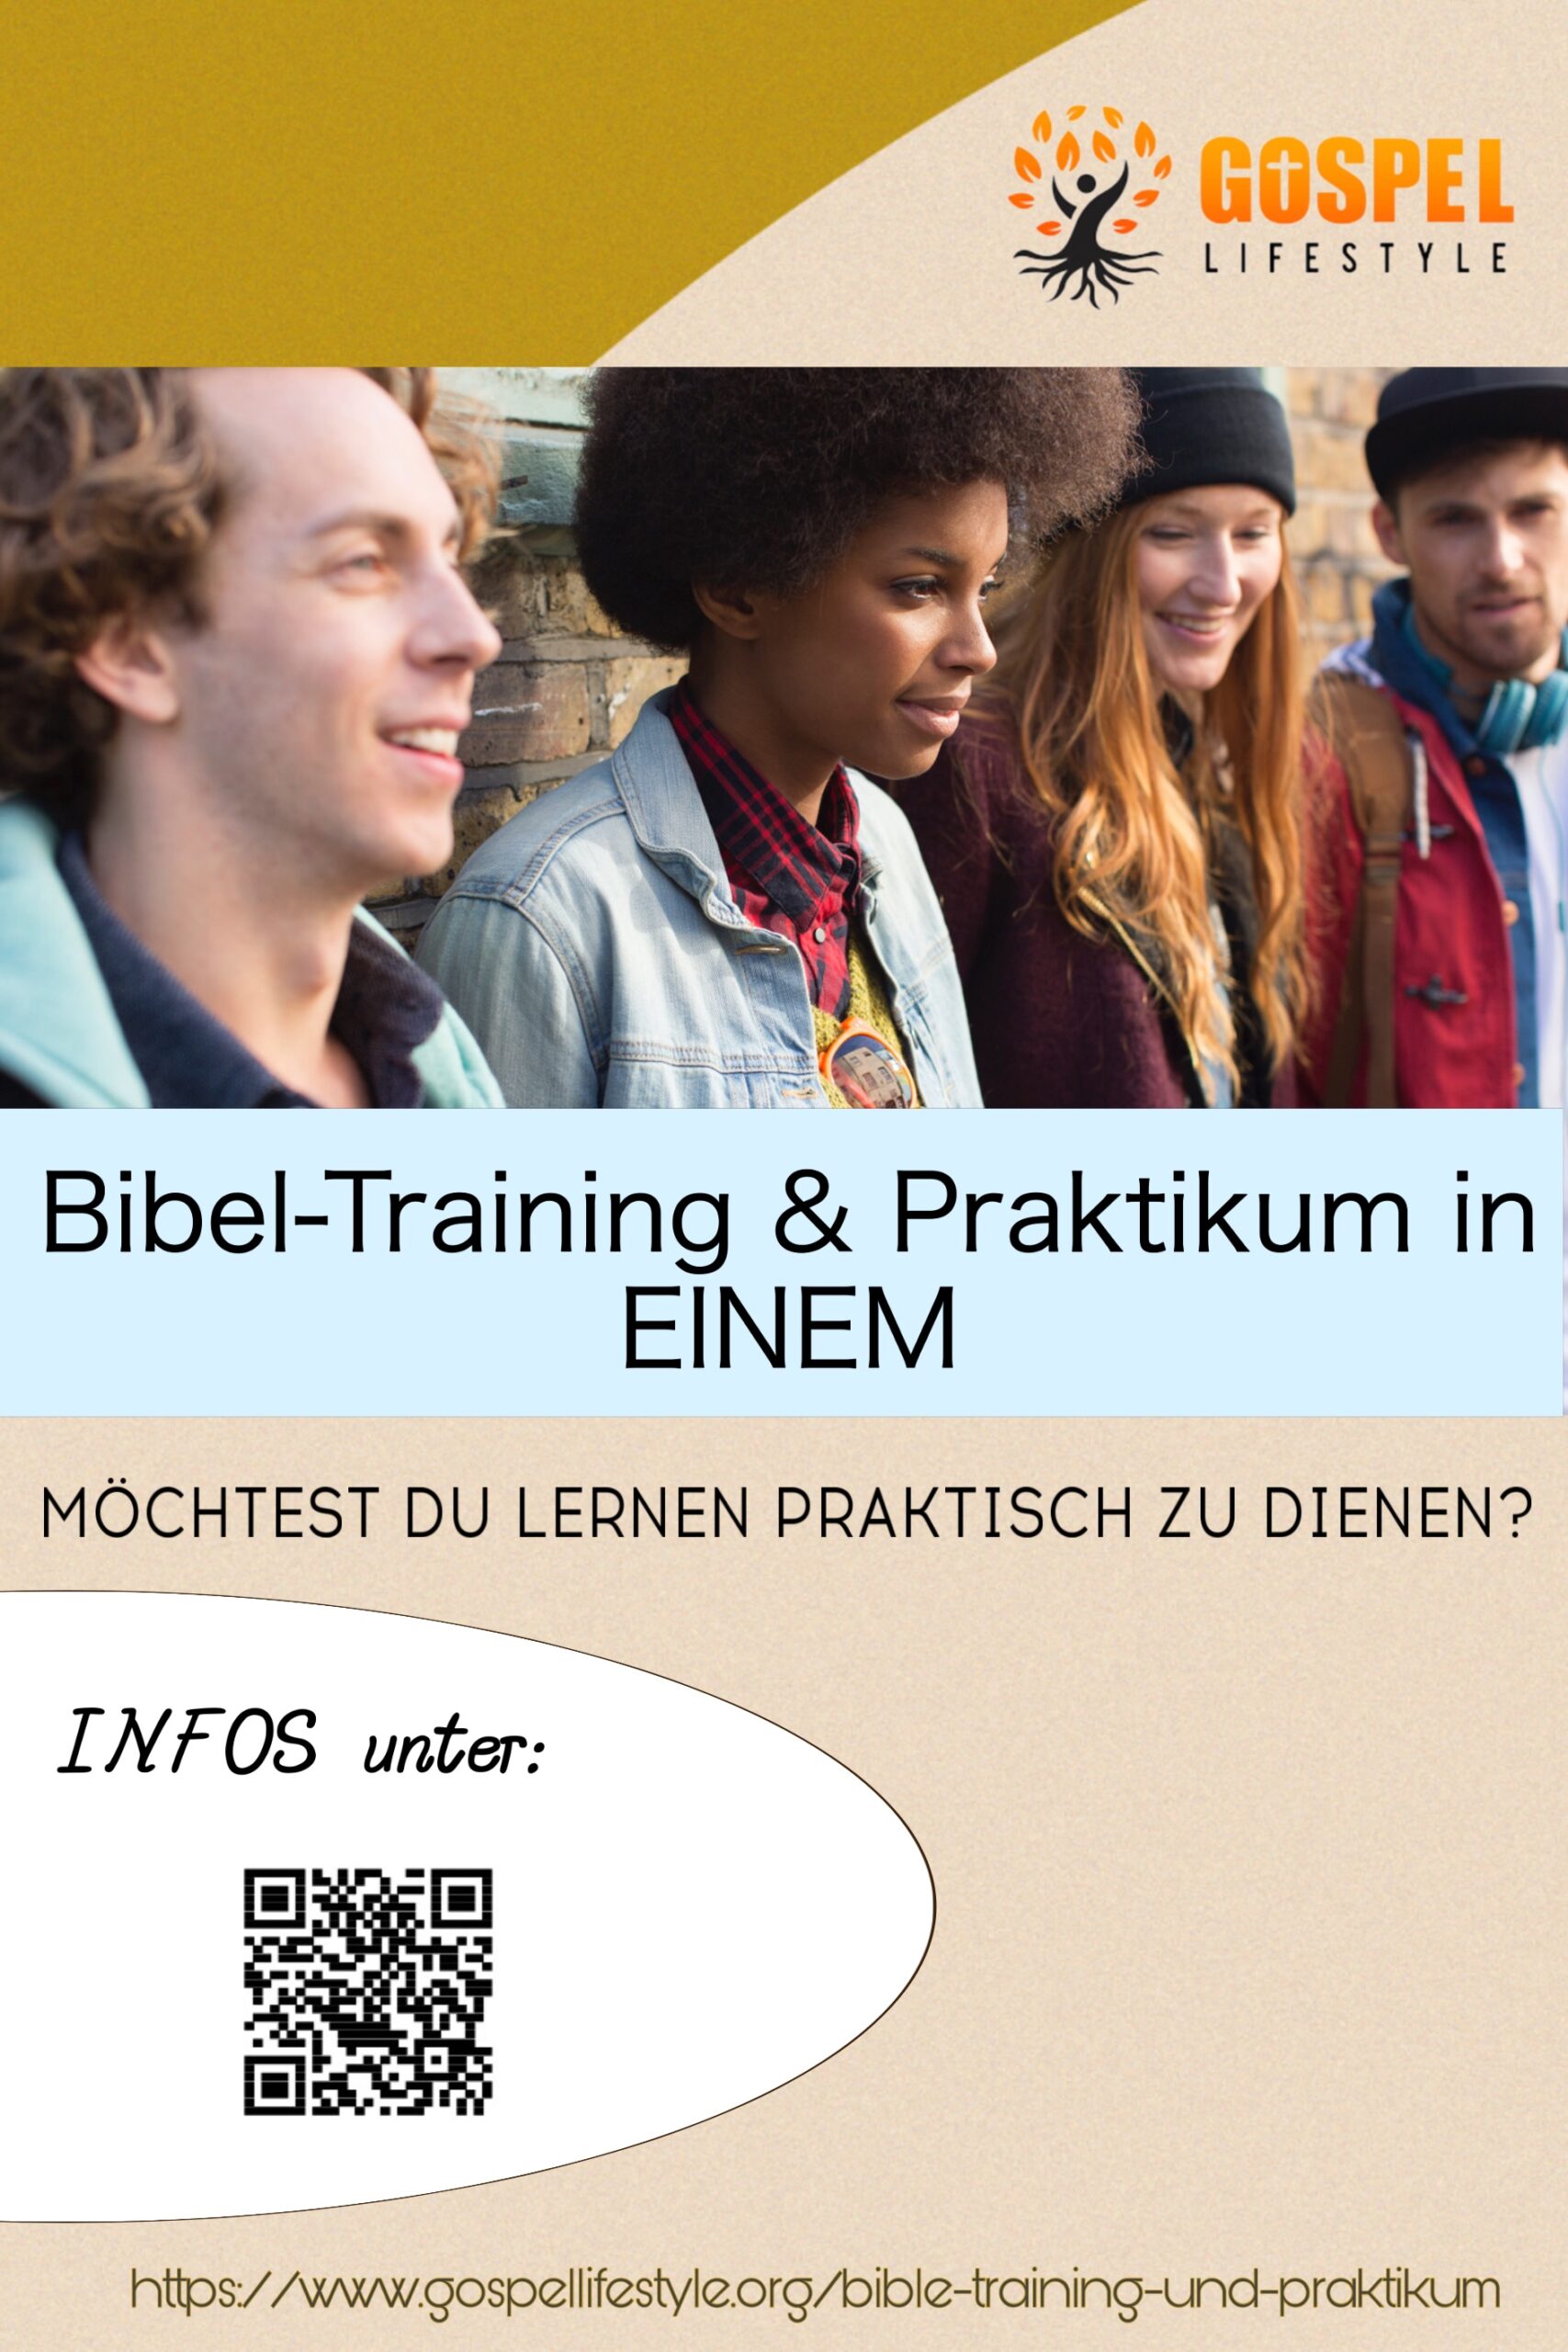 You are currently viewing Bible-Training und Praktikum